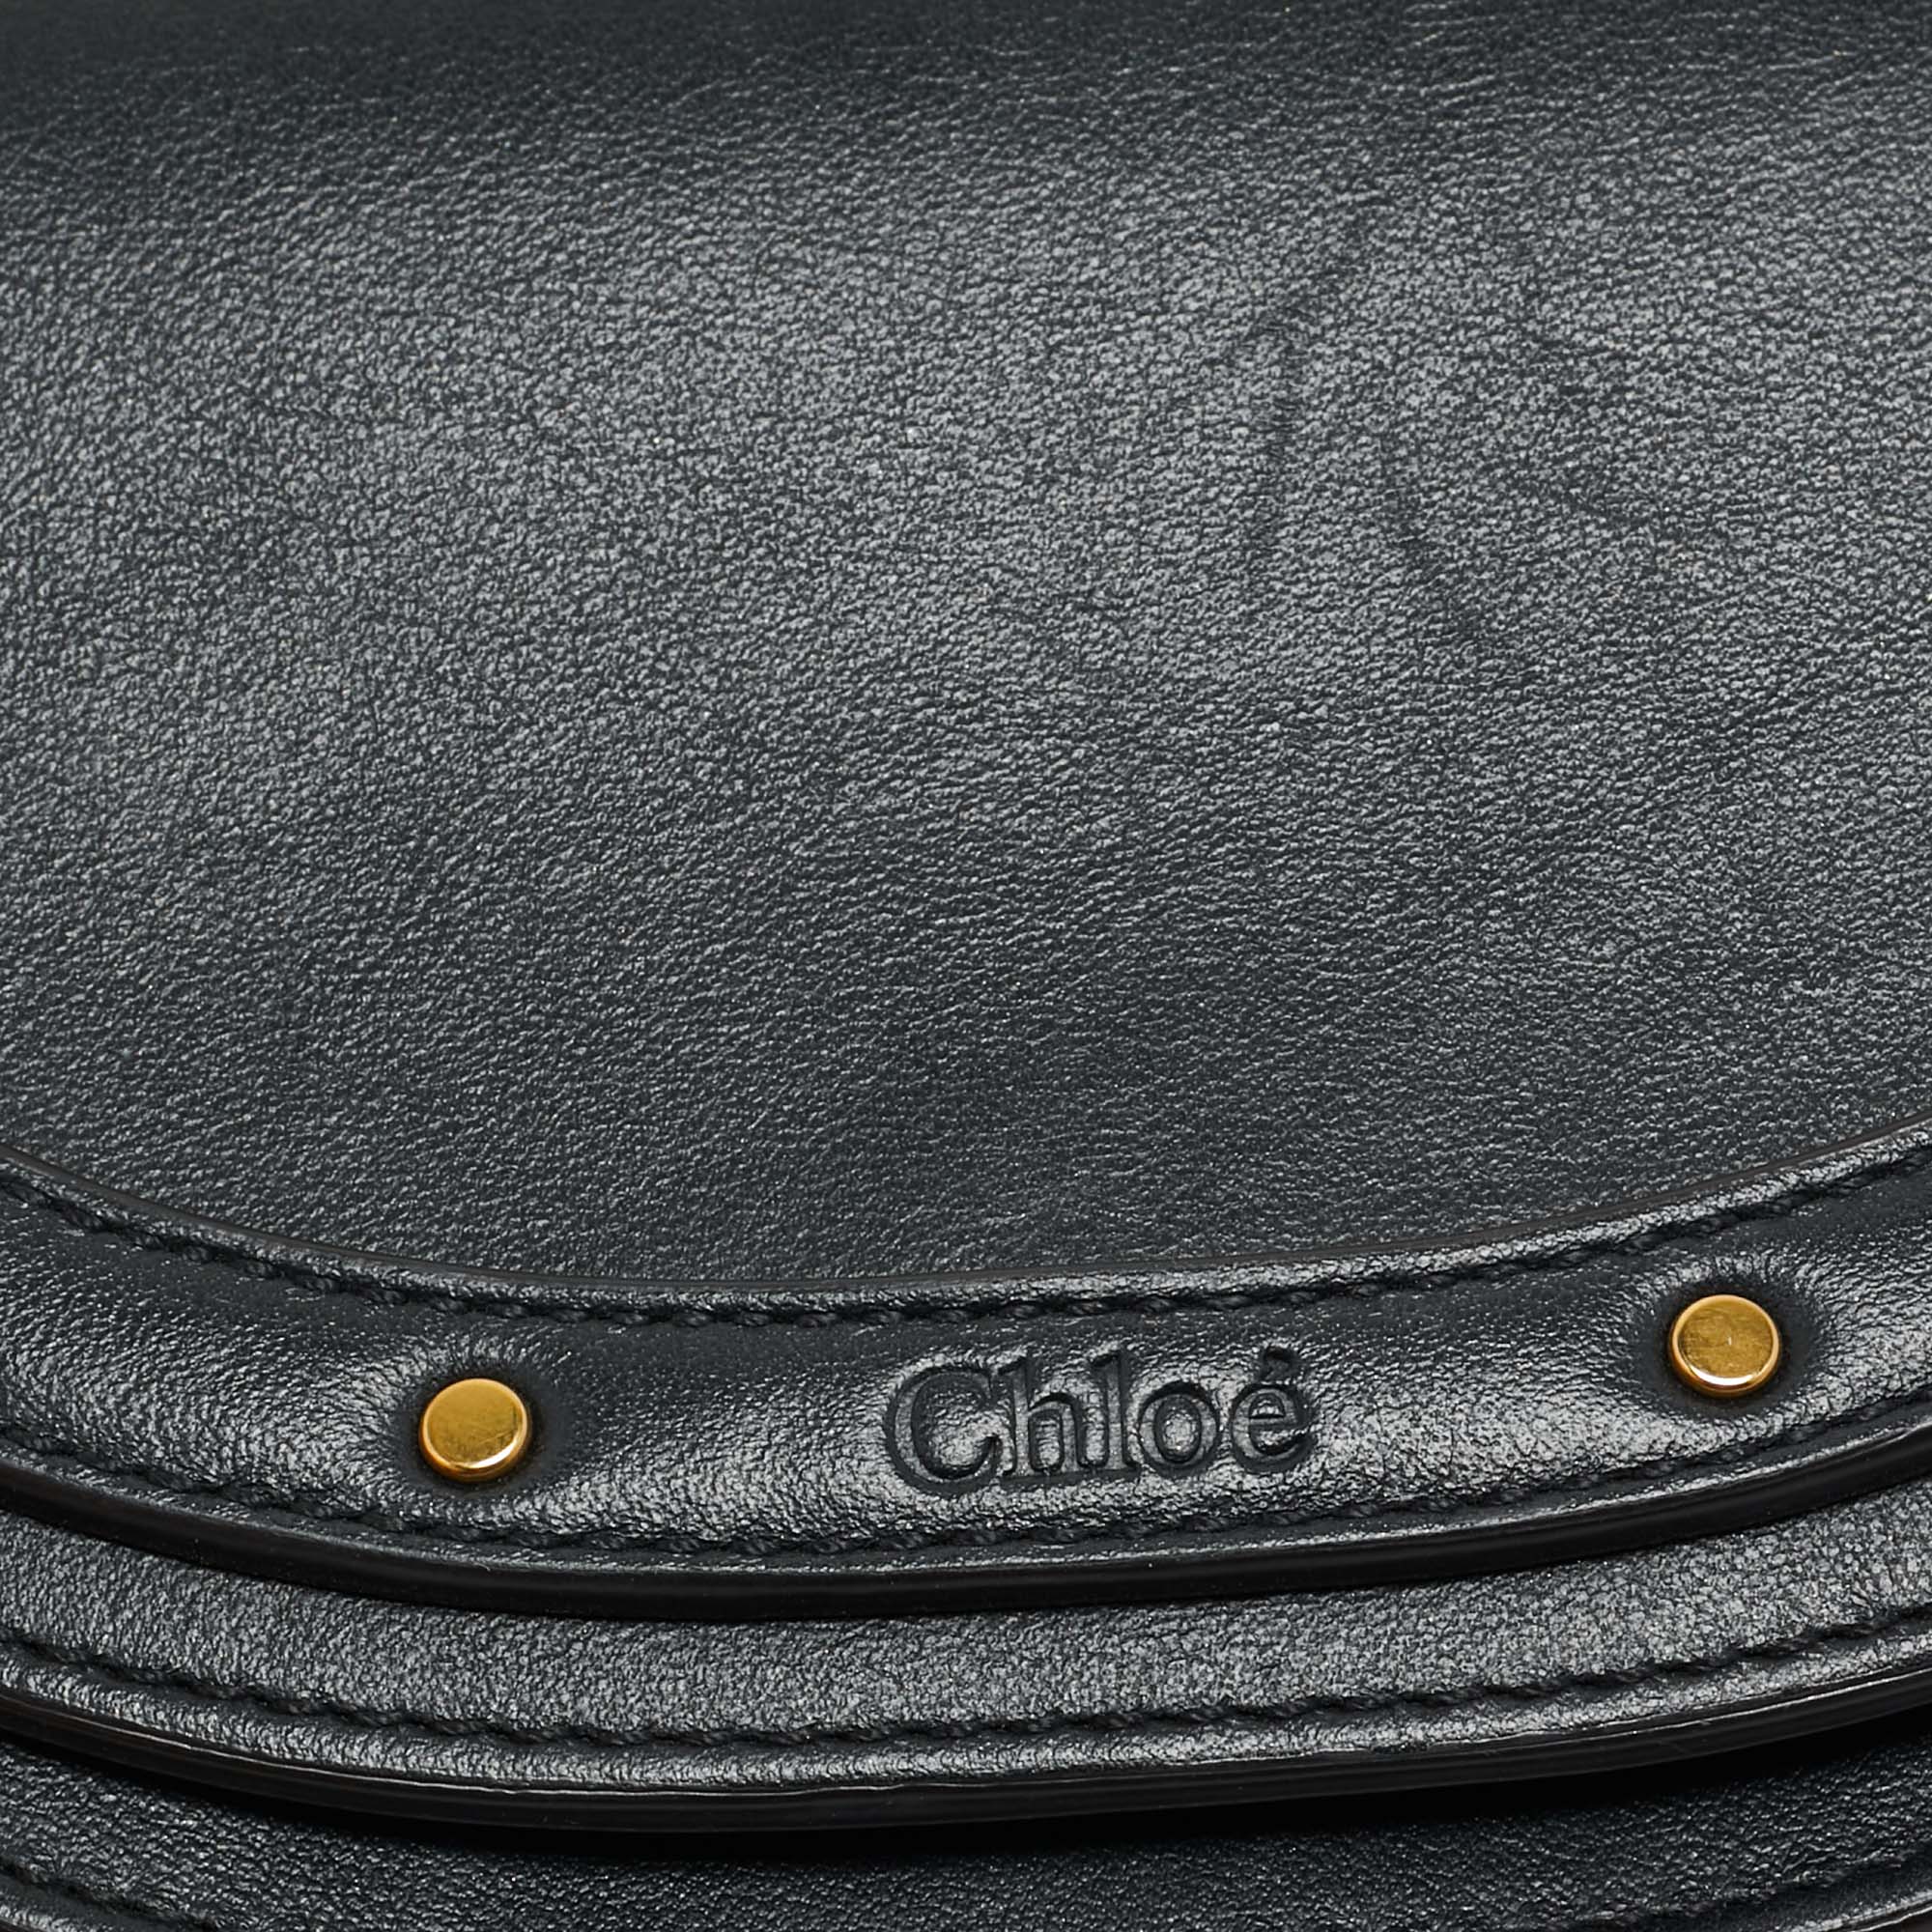 Chloé Black Leather Nile Bracelet Minaudiere Crossbody Bag